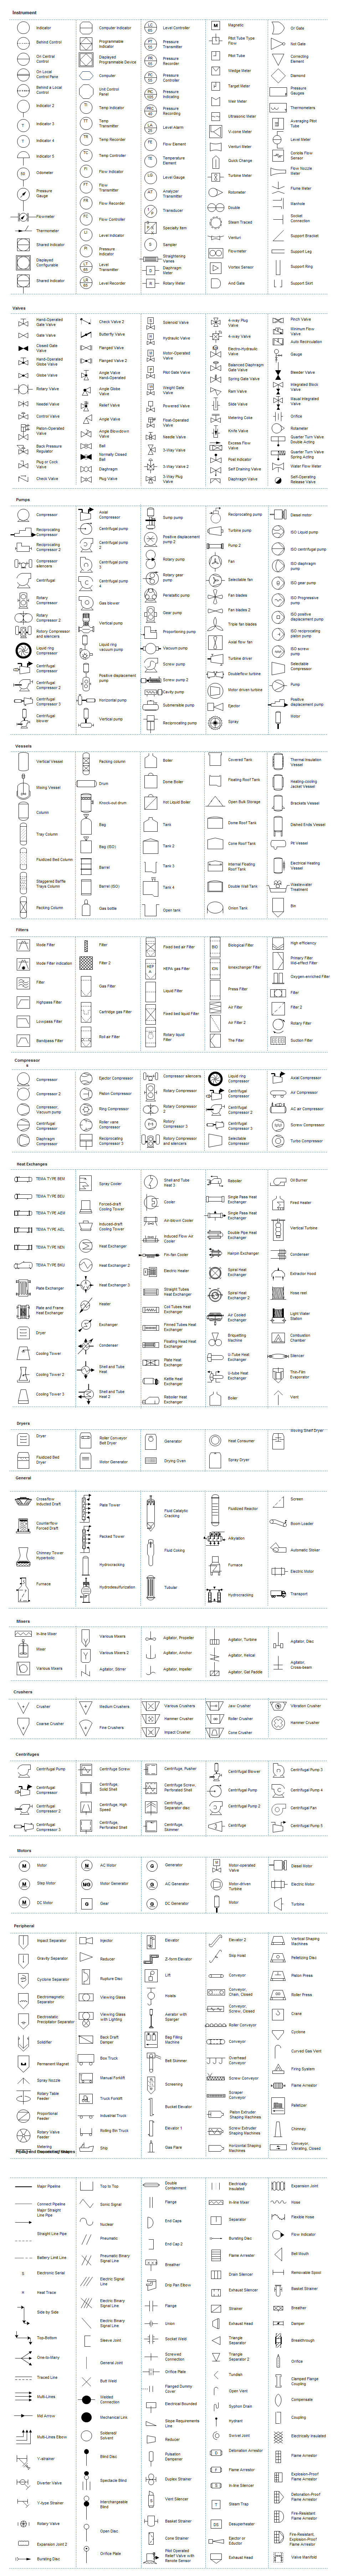 isometric symbols for piping pdf